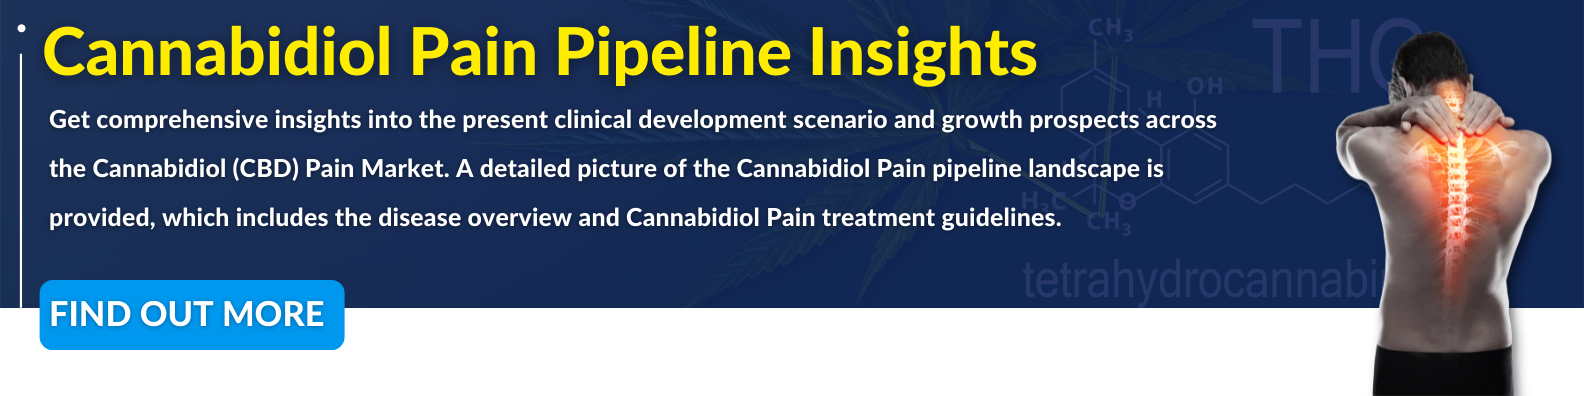 Cannabidiol Pain Pipeline Insights